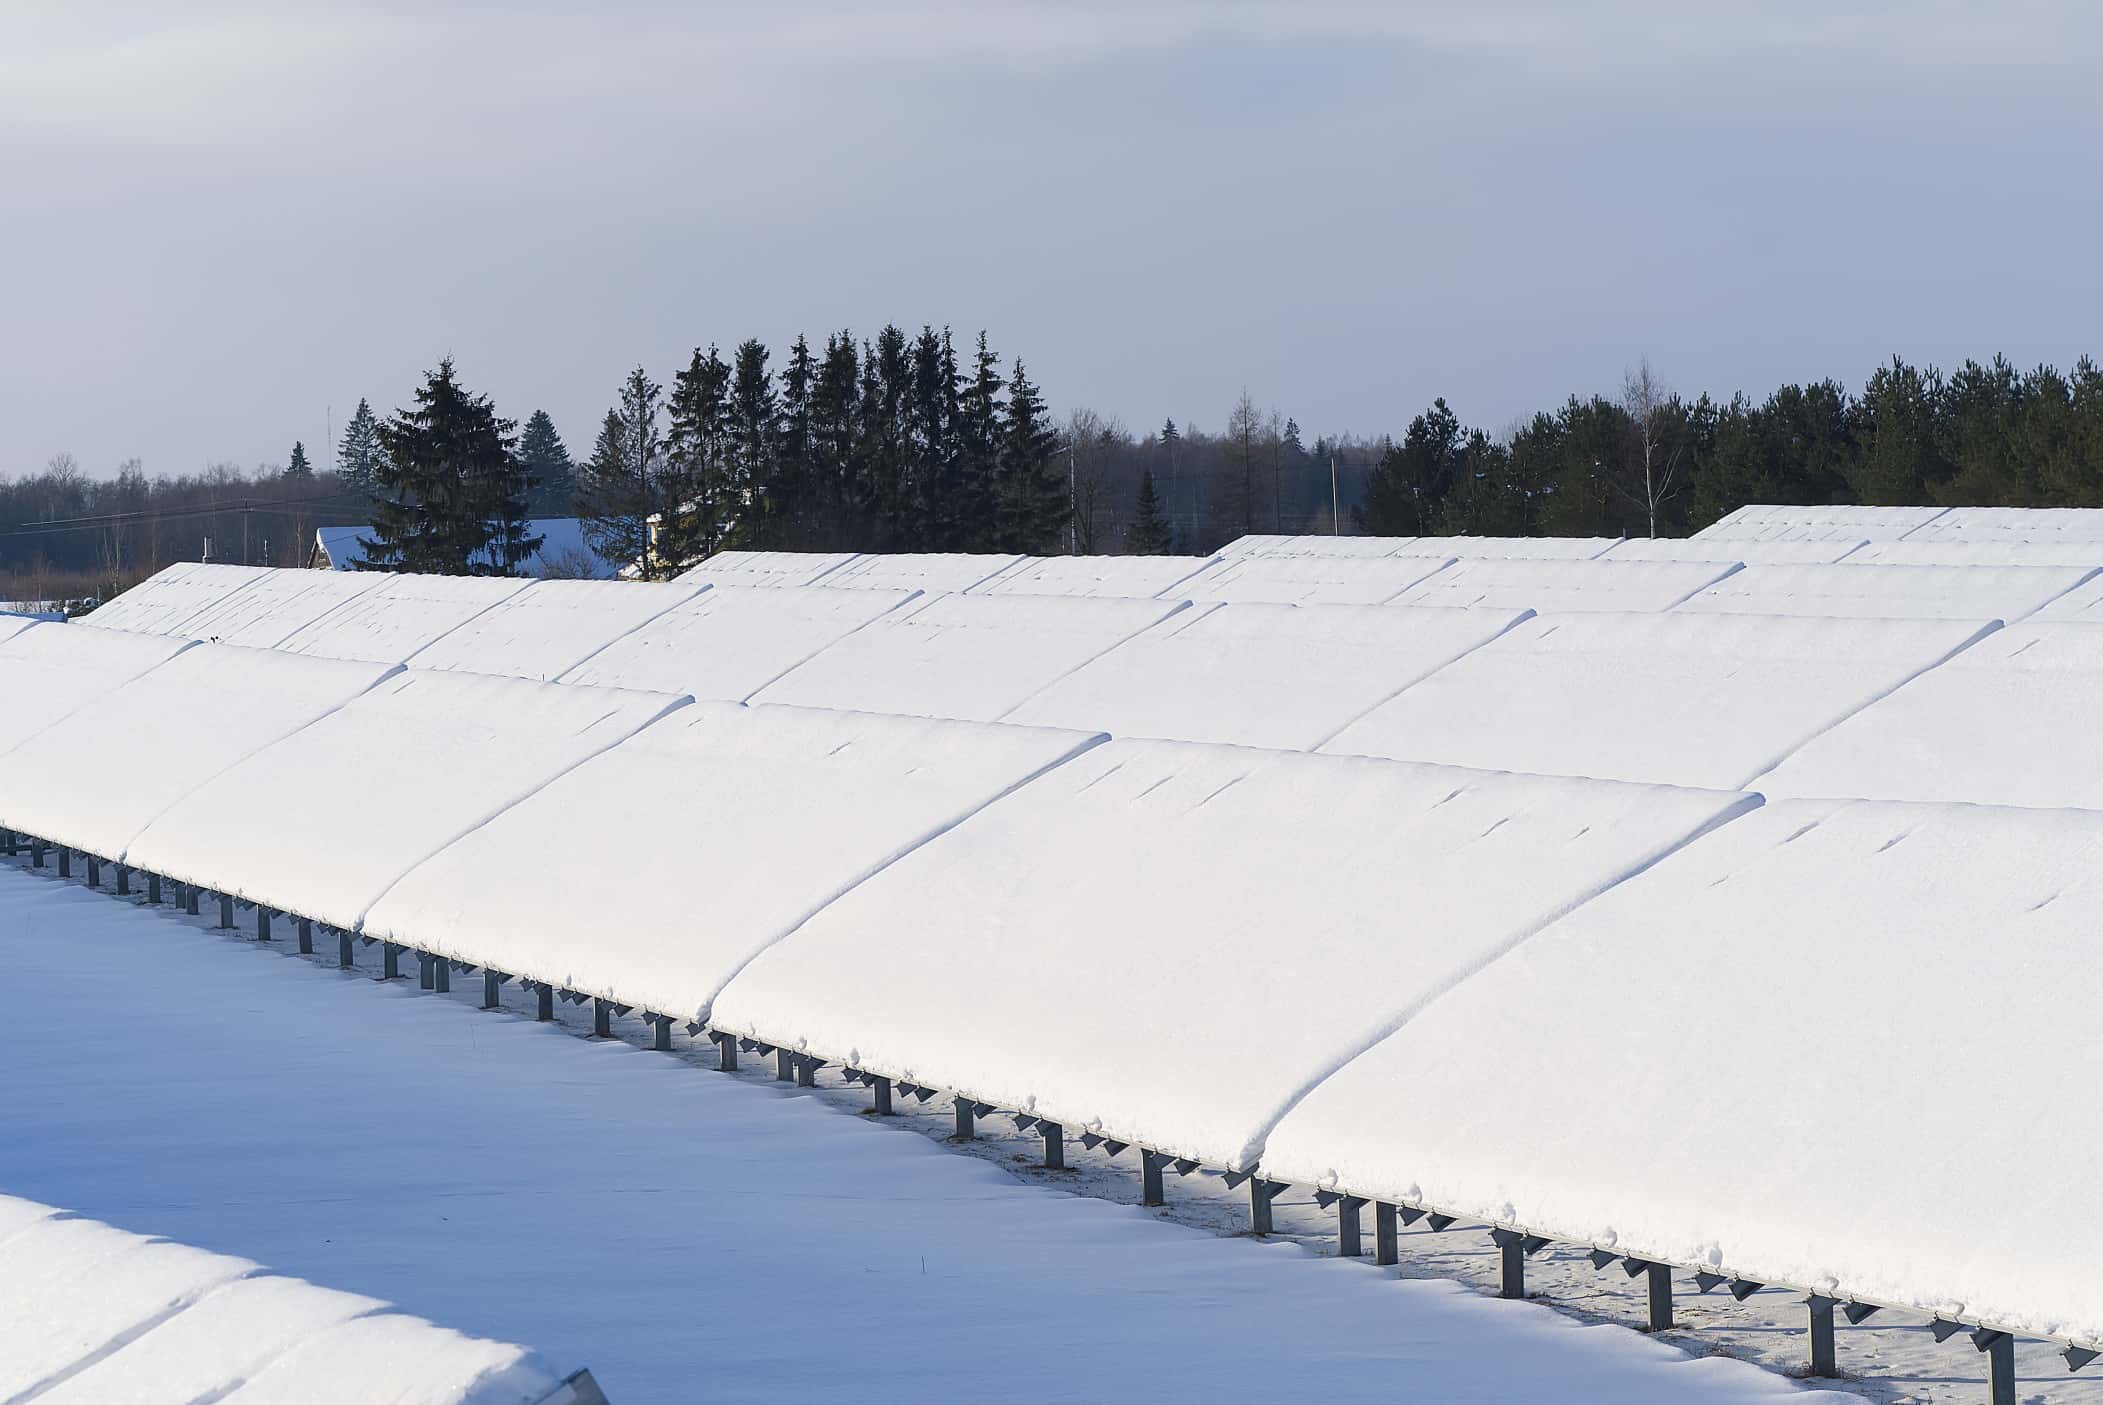 https://battlebornbatteries.com/wp-content/uploads/2022/01/solar-panel-field-covered-with-snow-renewable-energy-in-winter-low-efficiency-renewable-green-energy_t20_VJgm2P.jpg